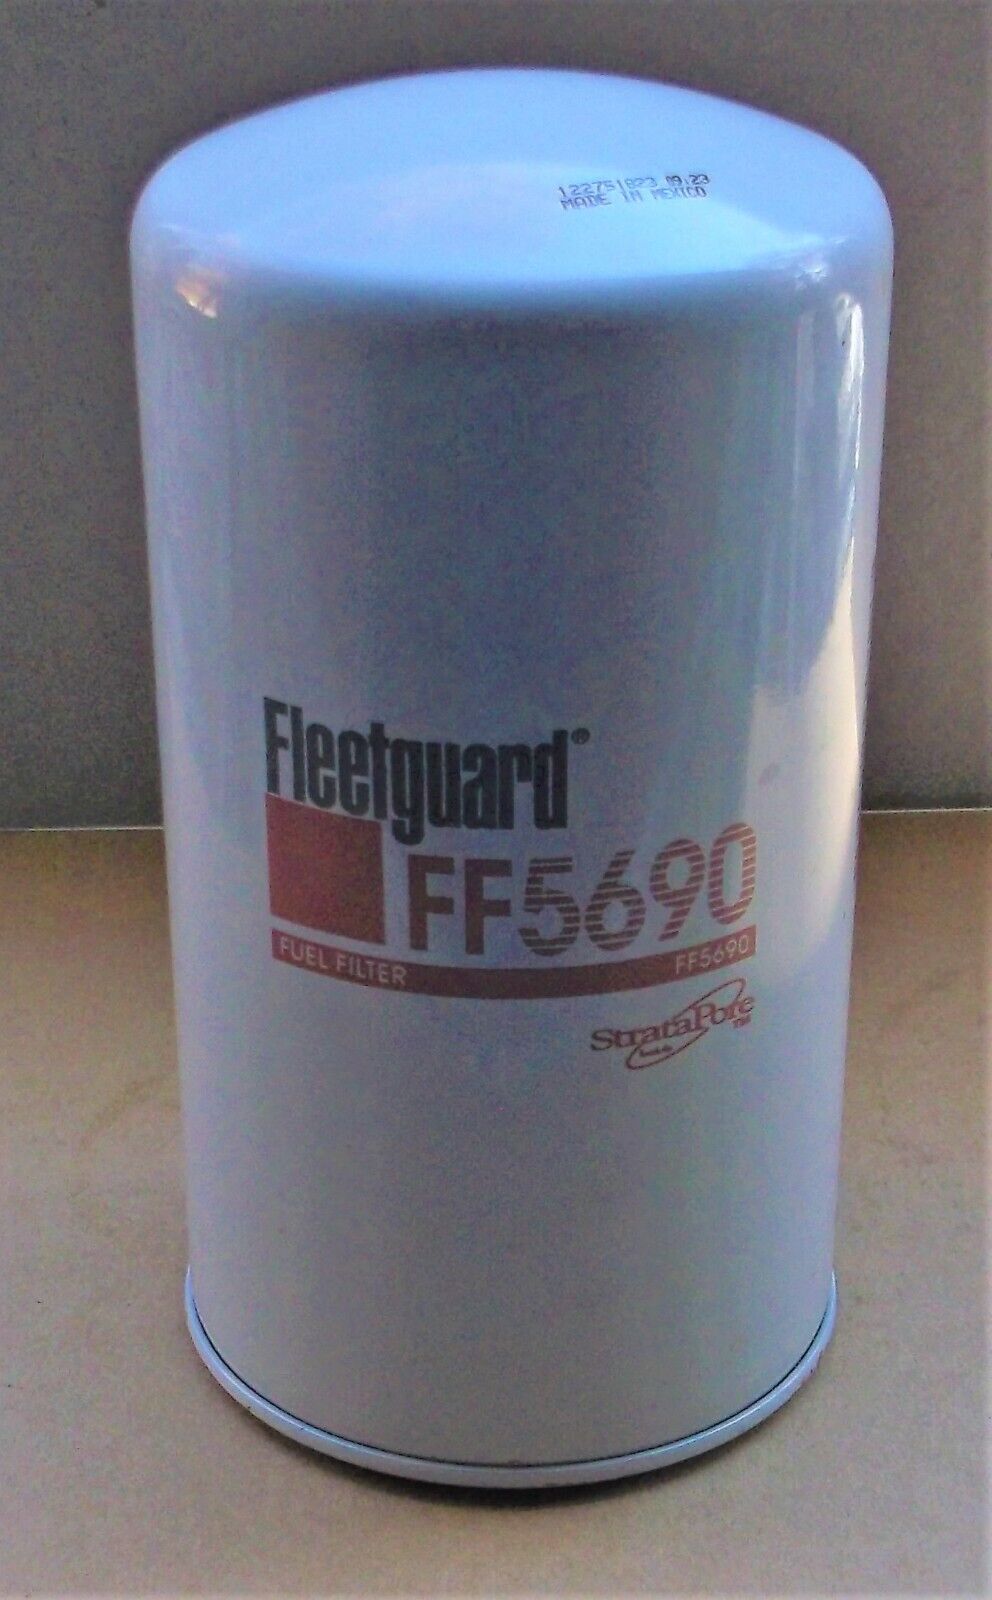 1 FLEETGUARD FF 5690 filter SUPER LOW SALE PRICE, SAVE NOW